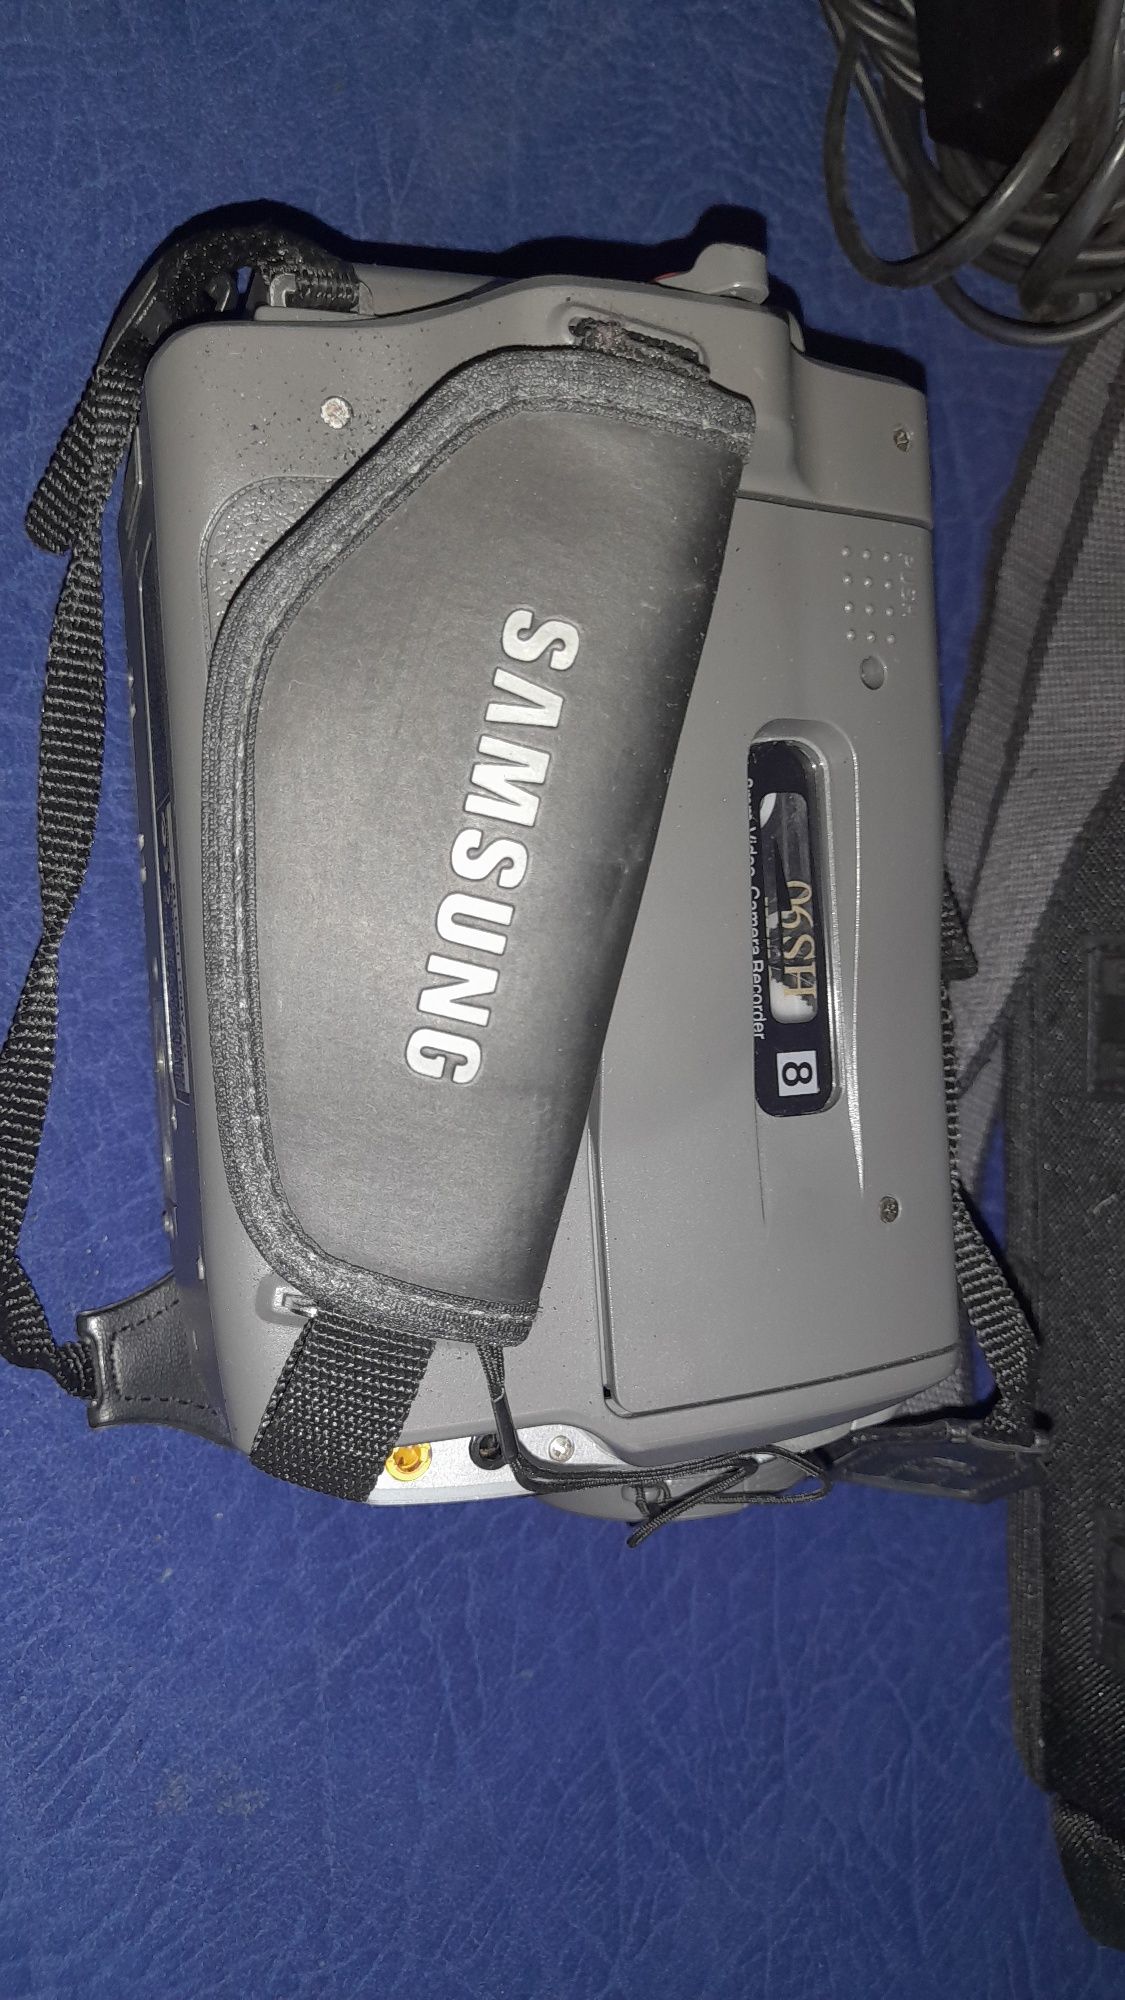 Camara filmar Samsung VP-M50